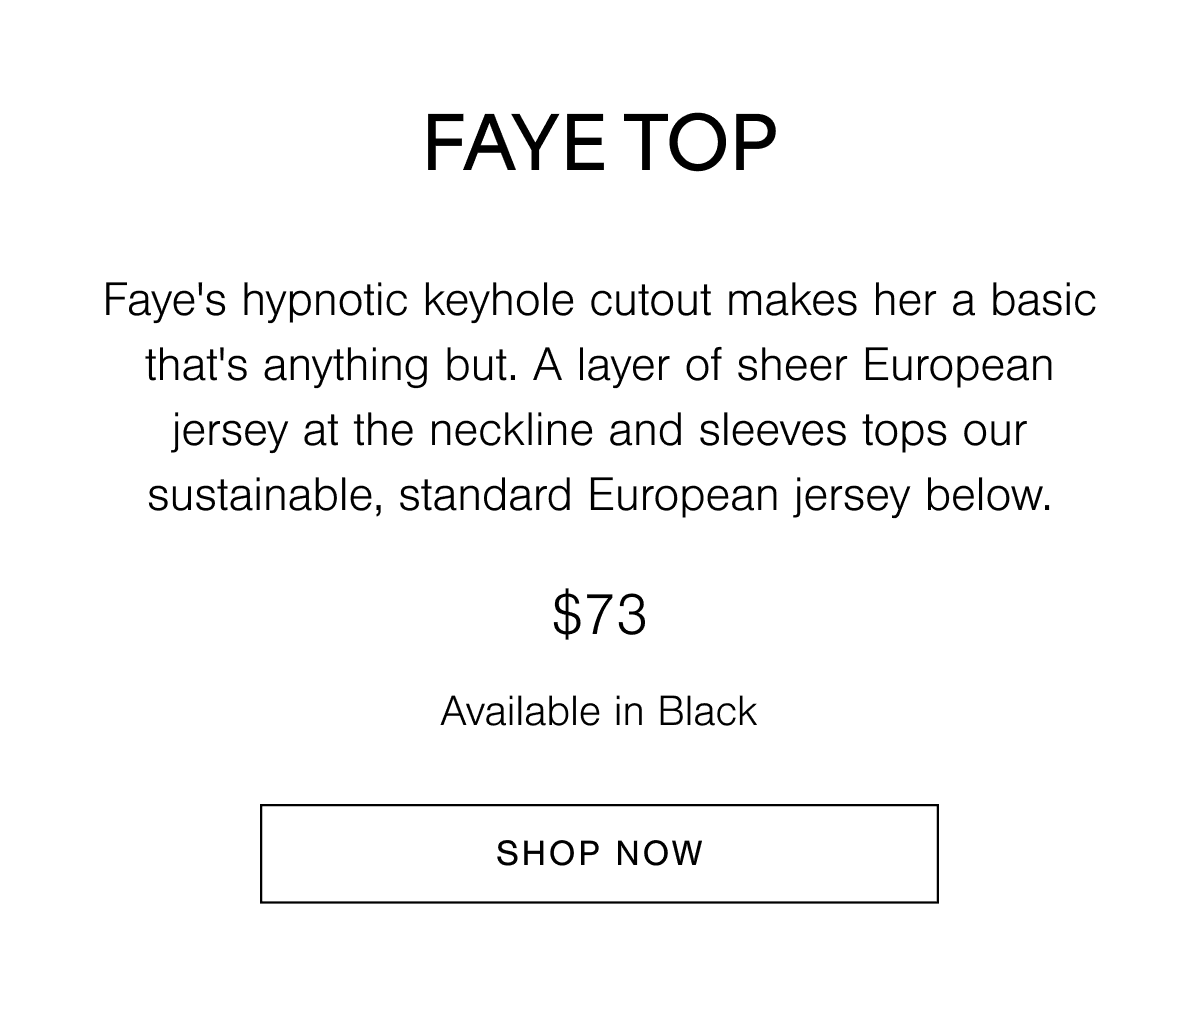 The Faye Top